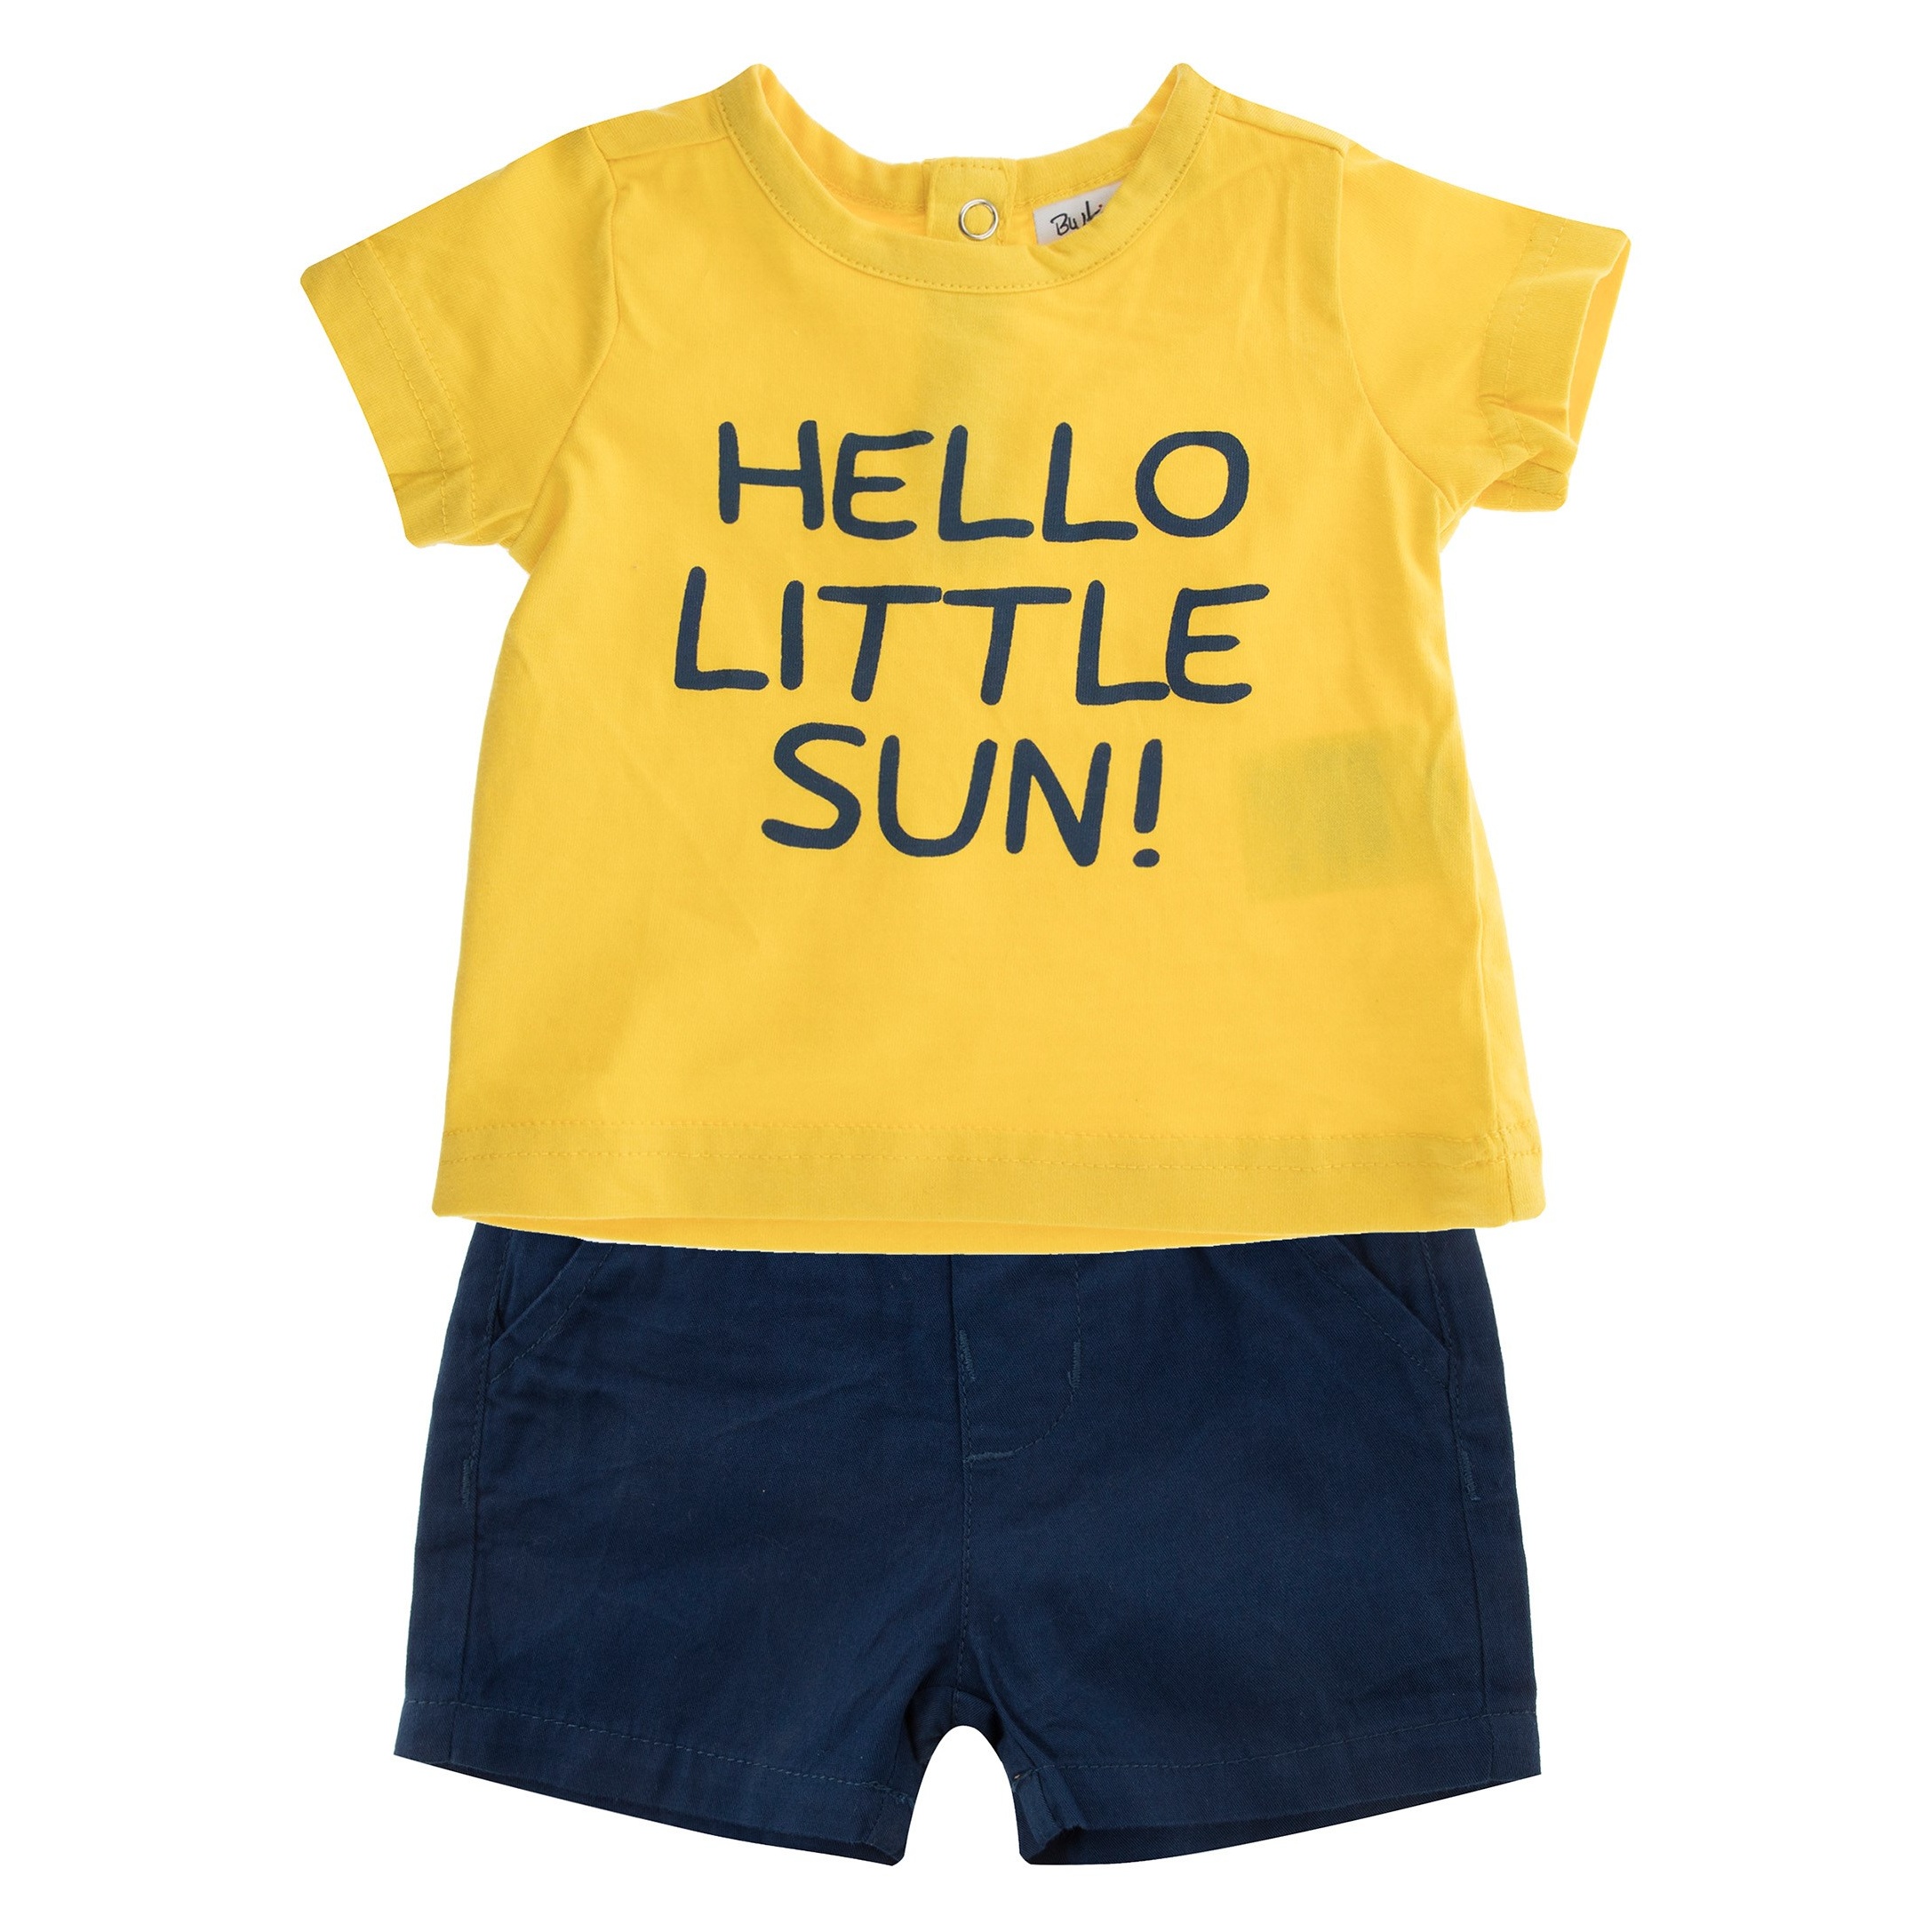 تی شرت و شلوارک نخی نوزادی پسرانه - بلوکیدز - زرد و سرمه اي - 1